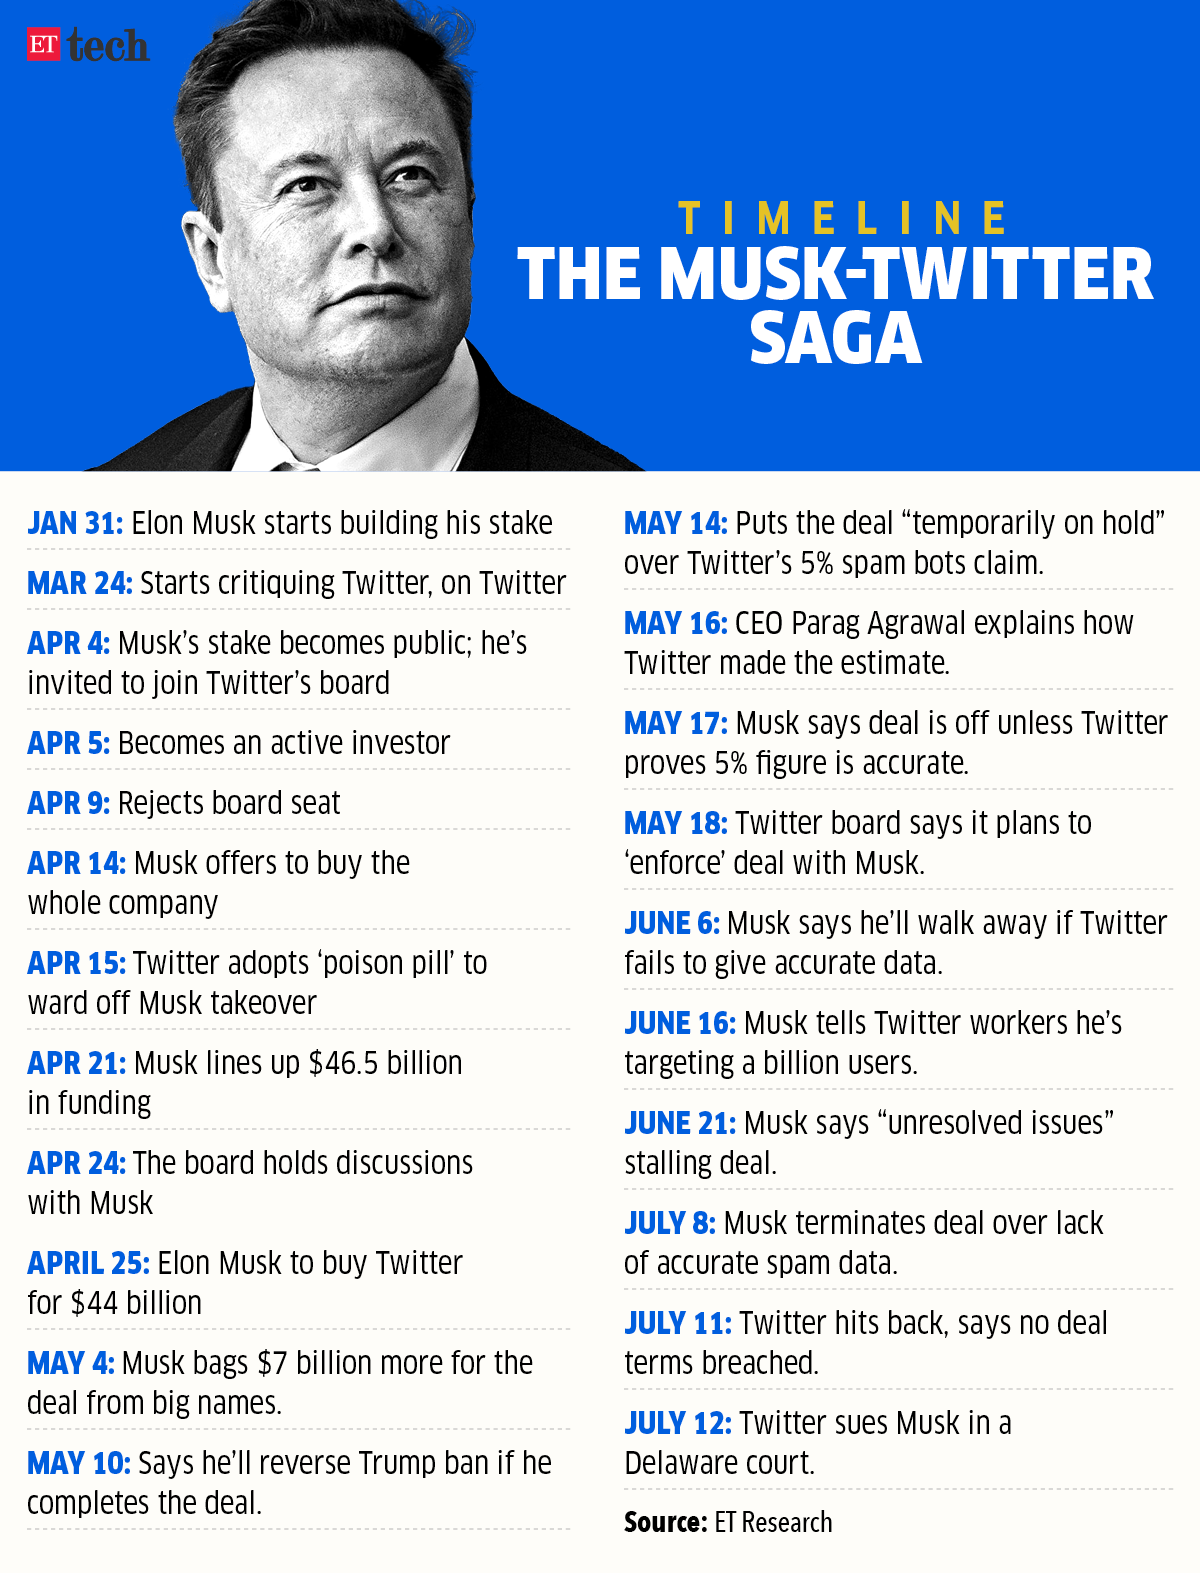 Twitter-Musk Timeline